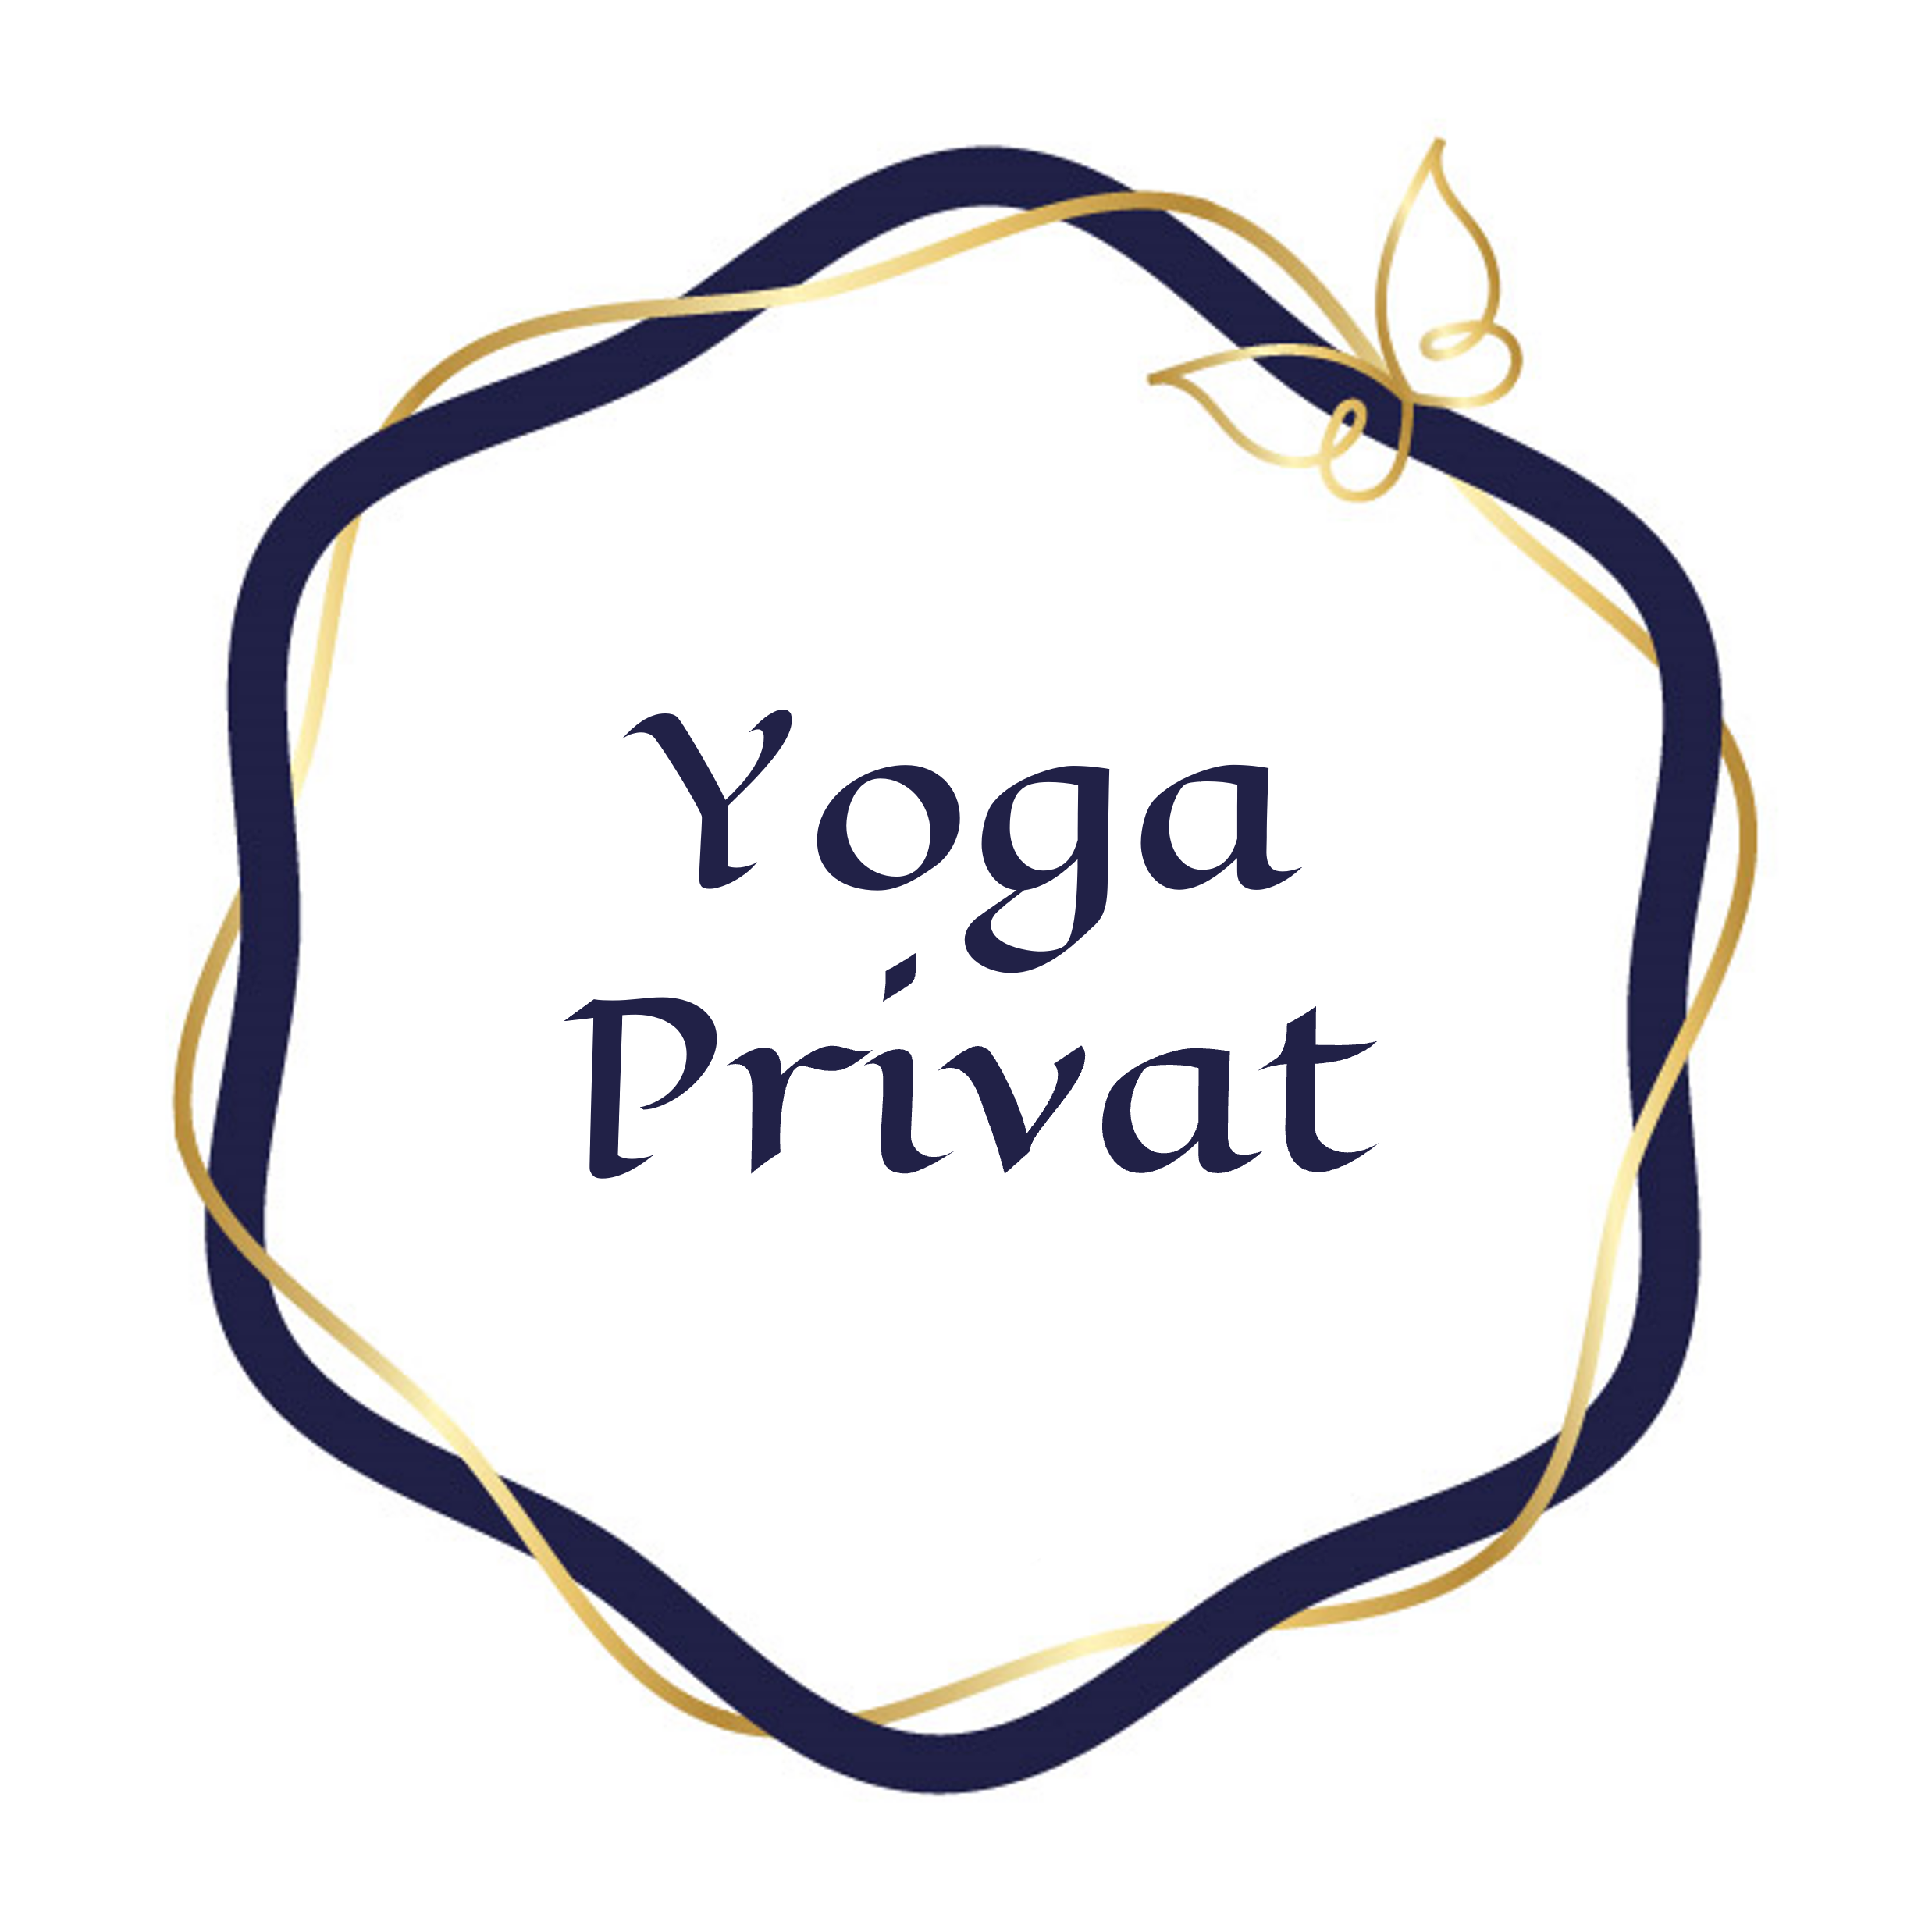 Yoga privatstunde in dresden